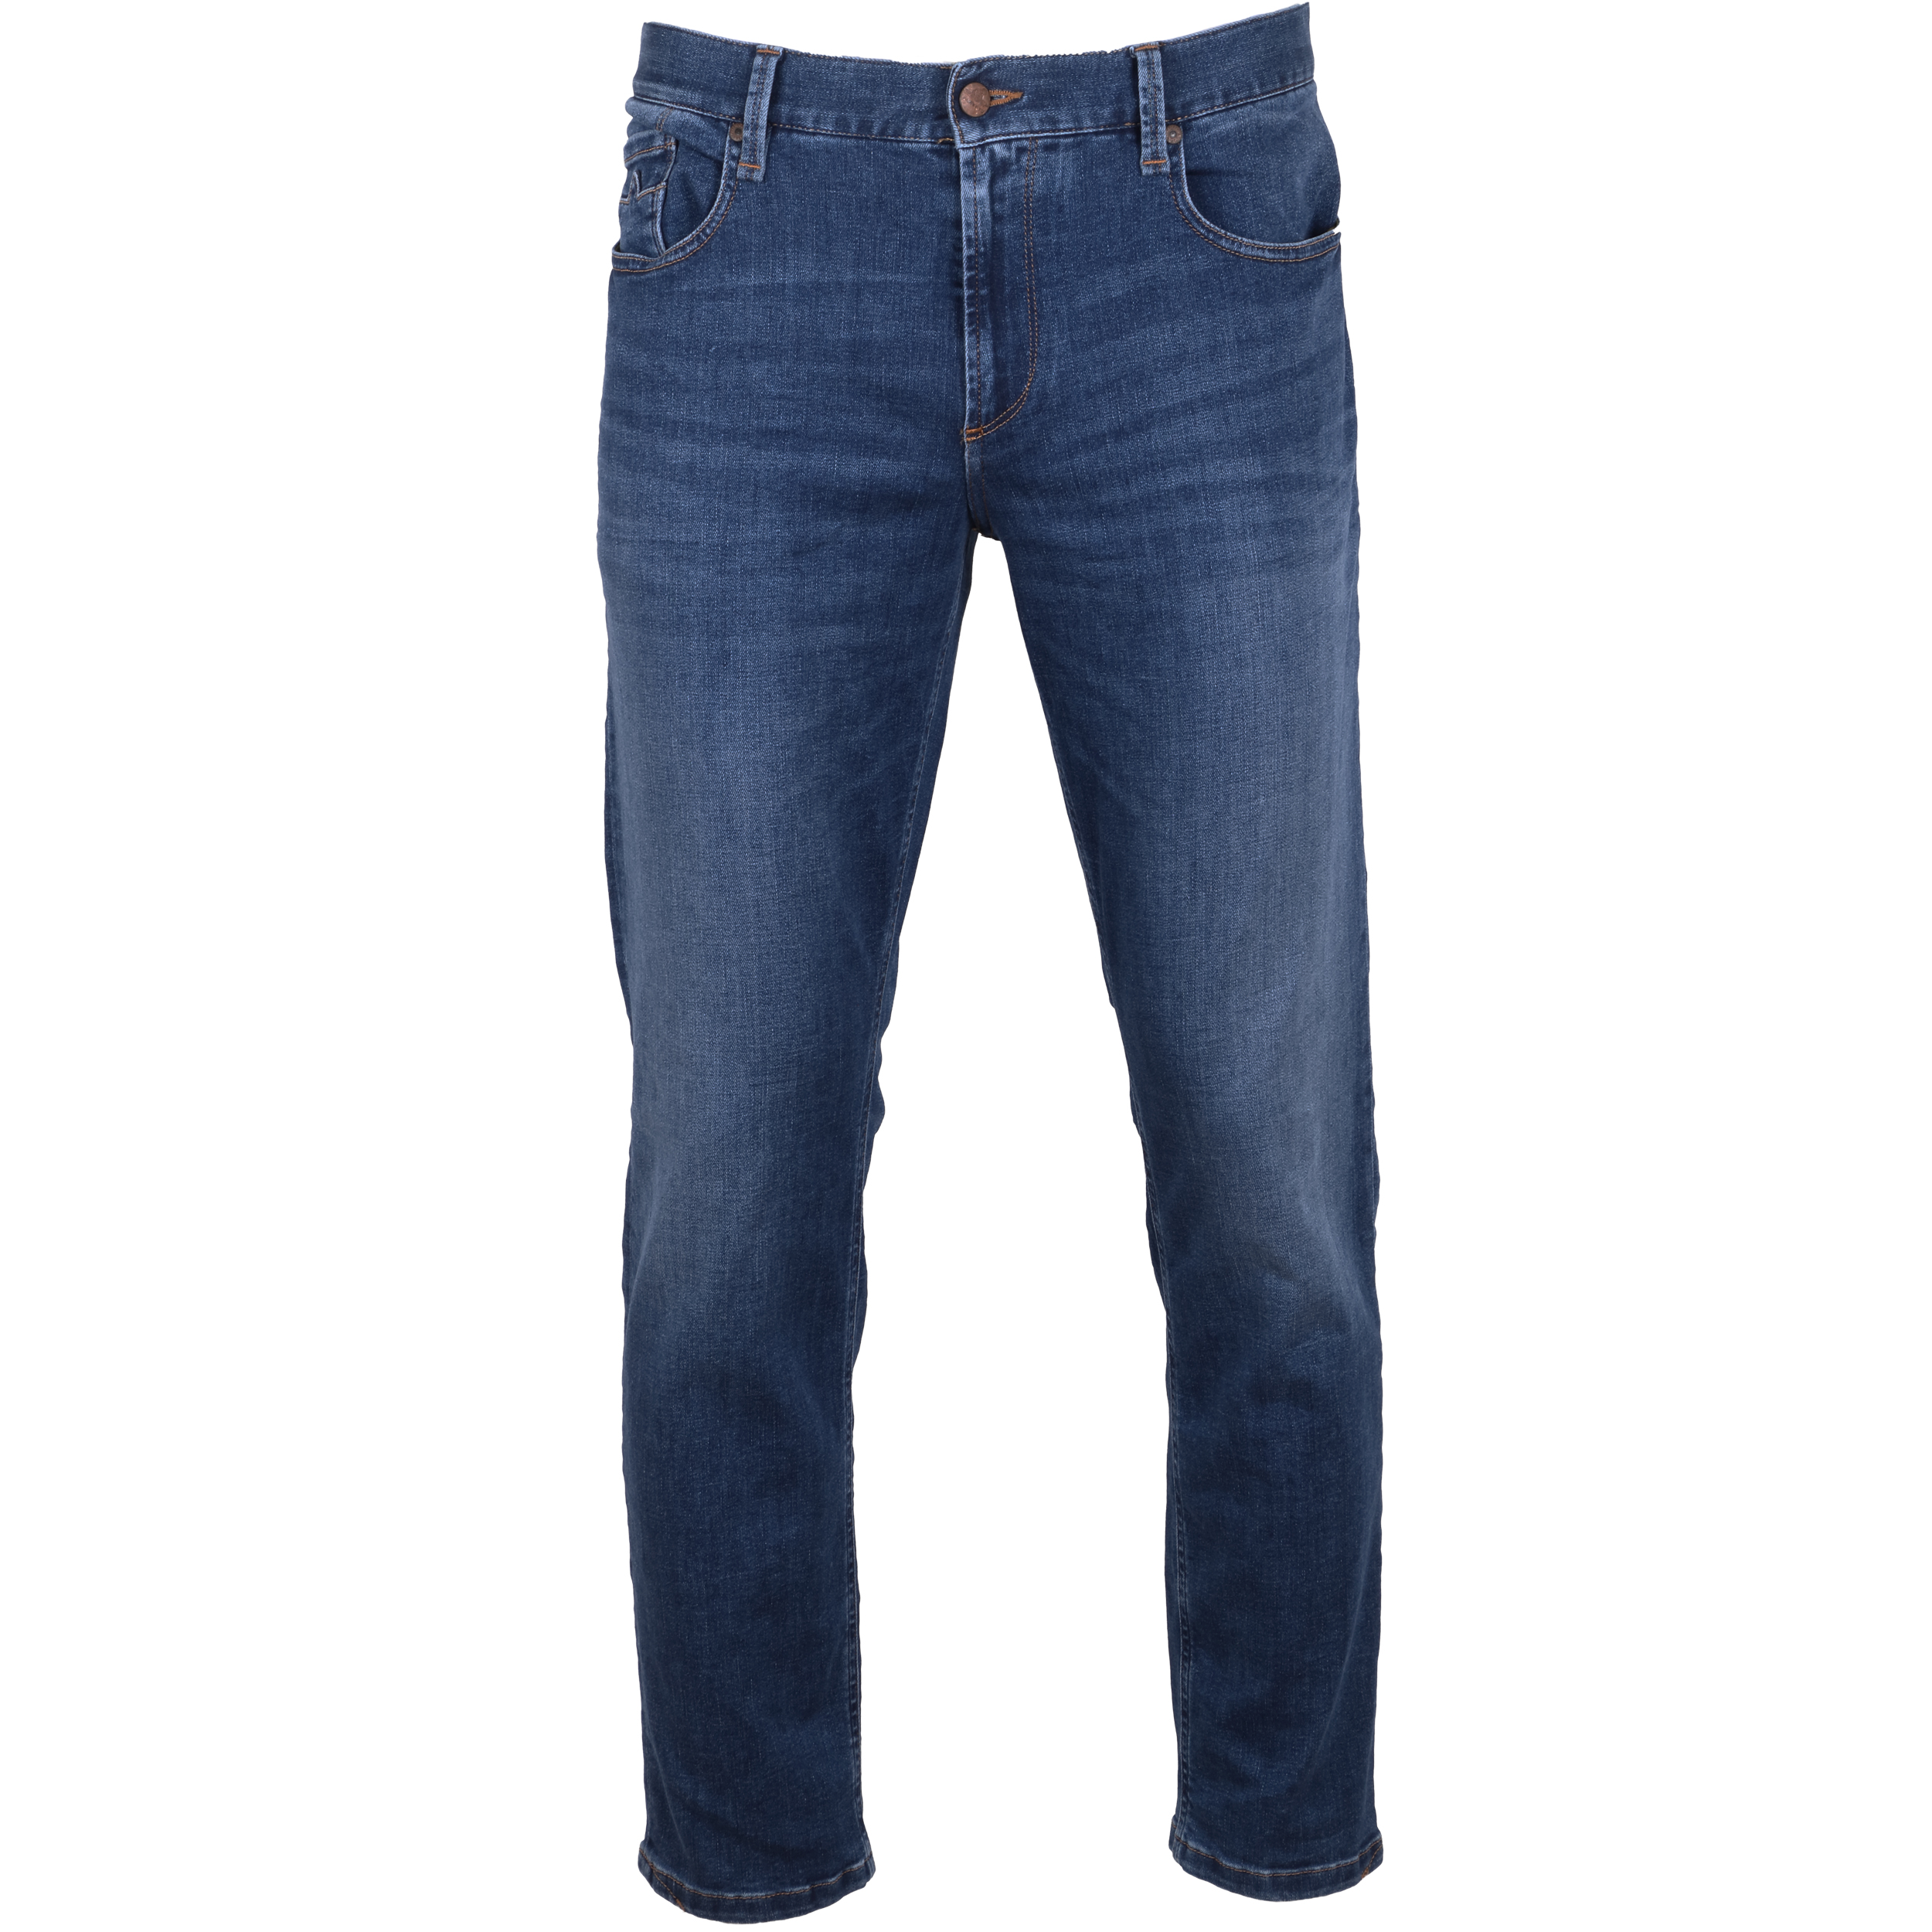 Alberto Herren Jeans Slipe tapered fit - blau 33/30